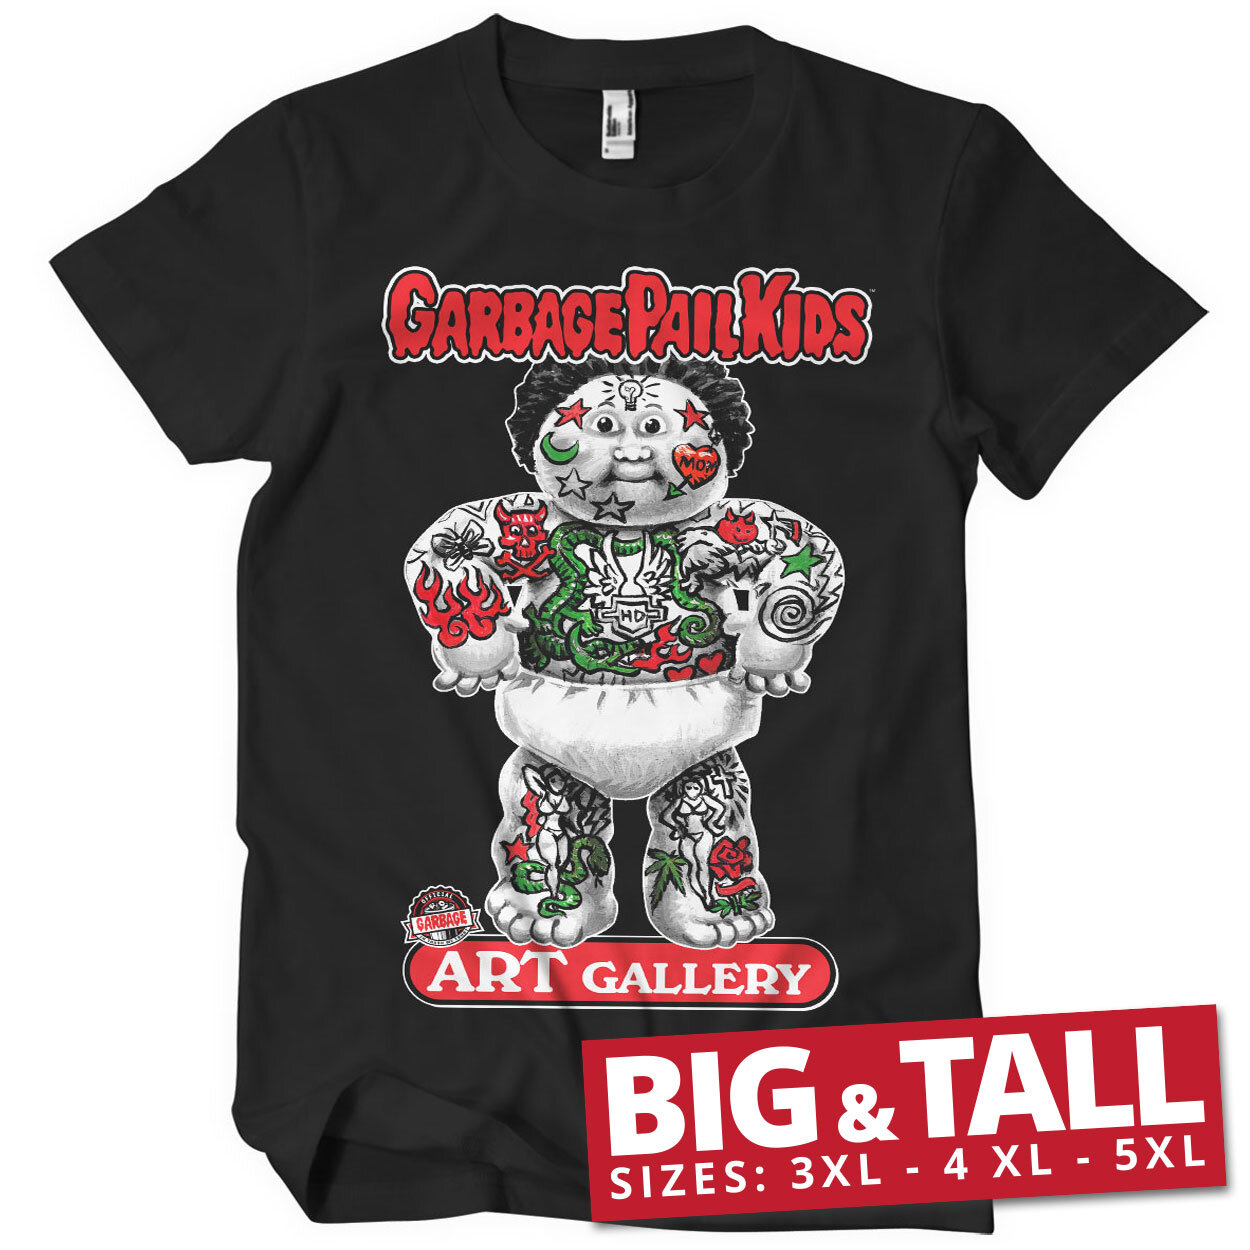 Art Gallery Big & Tall T-Shirt